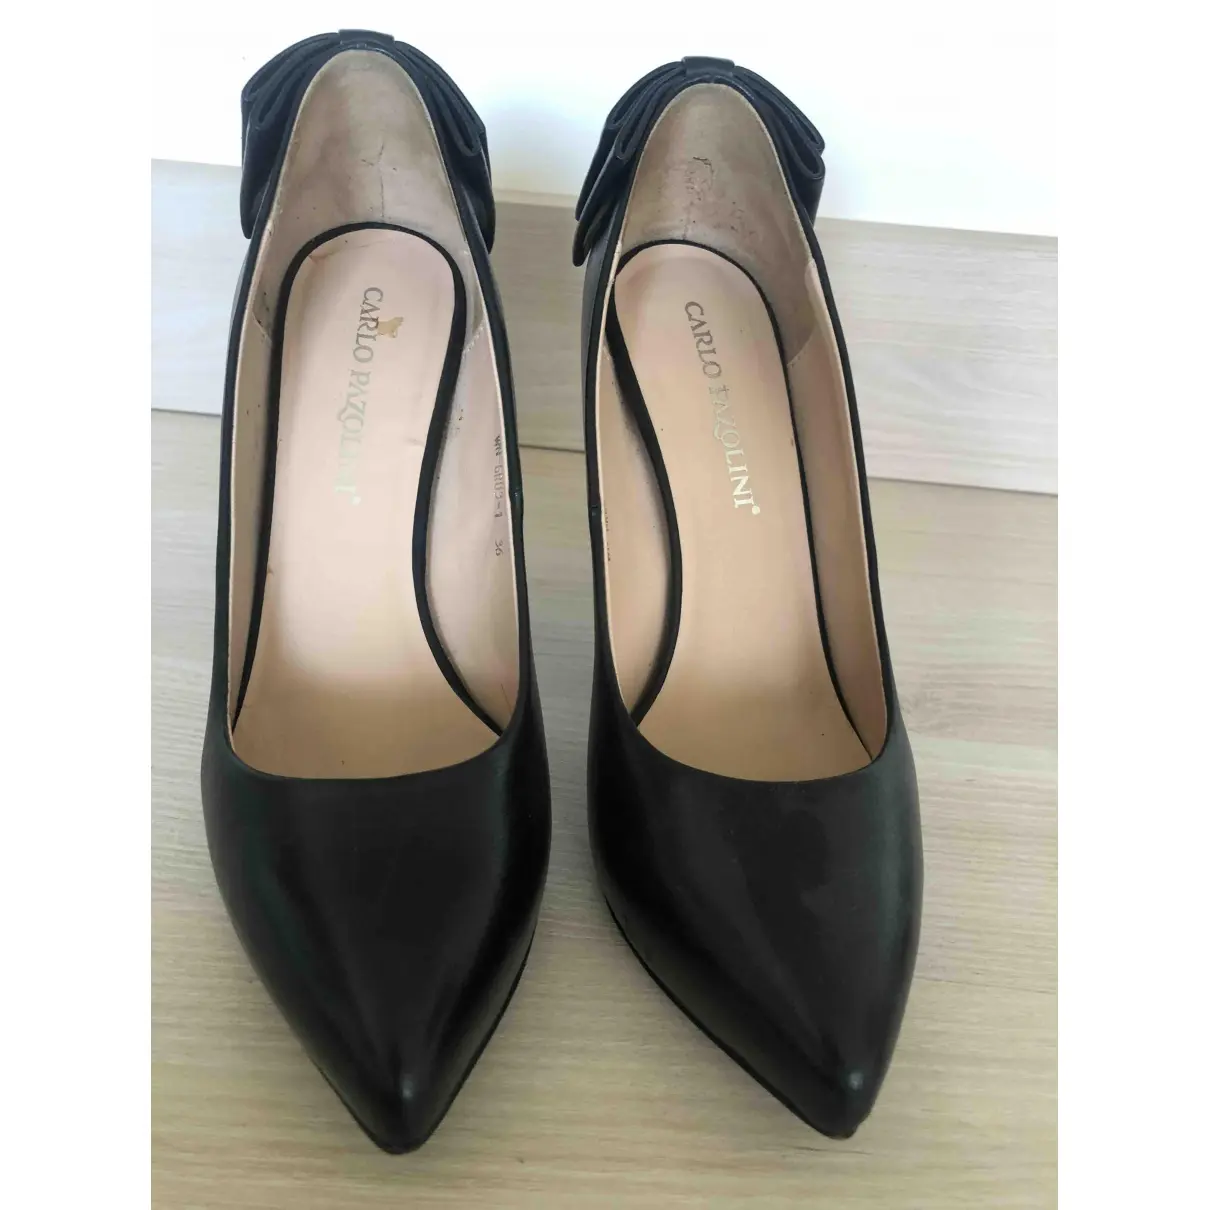 Buy Carlo Pazolini Leather heels online